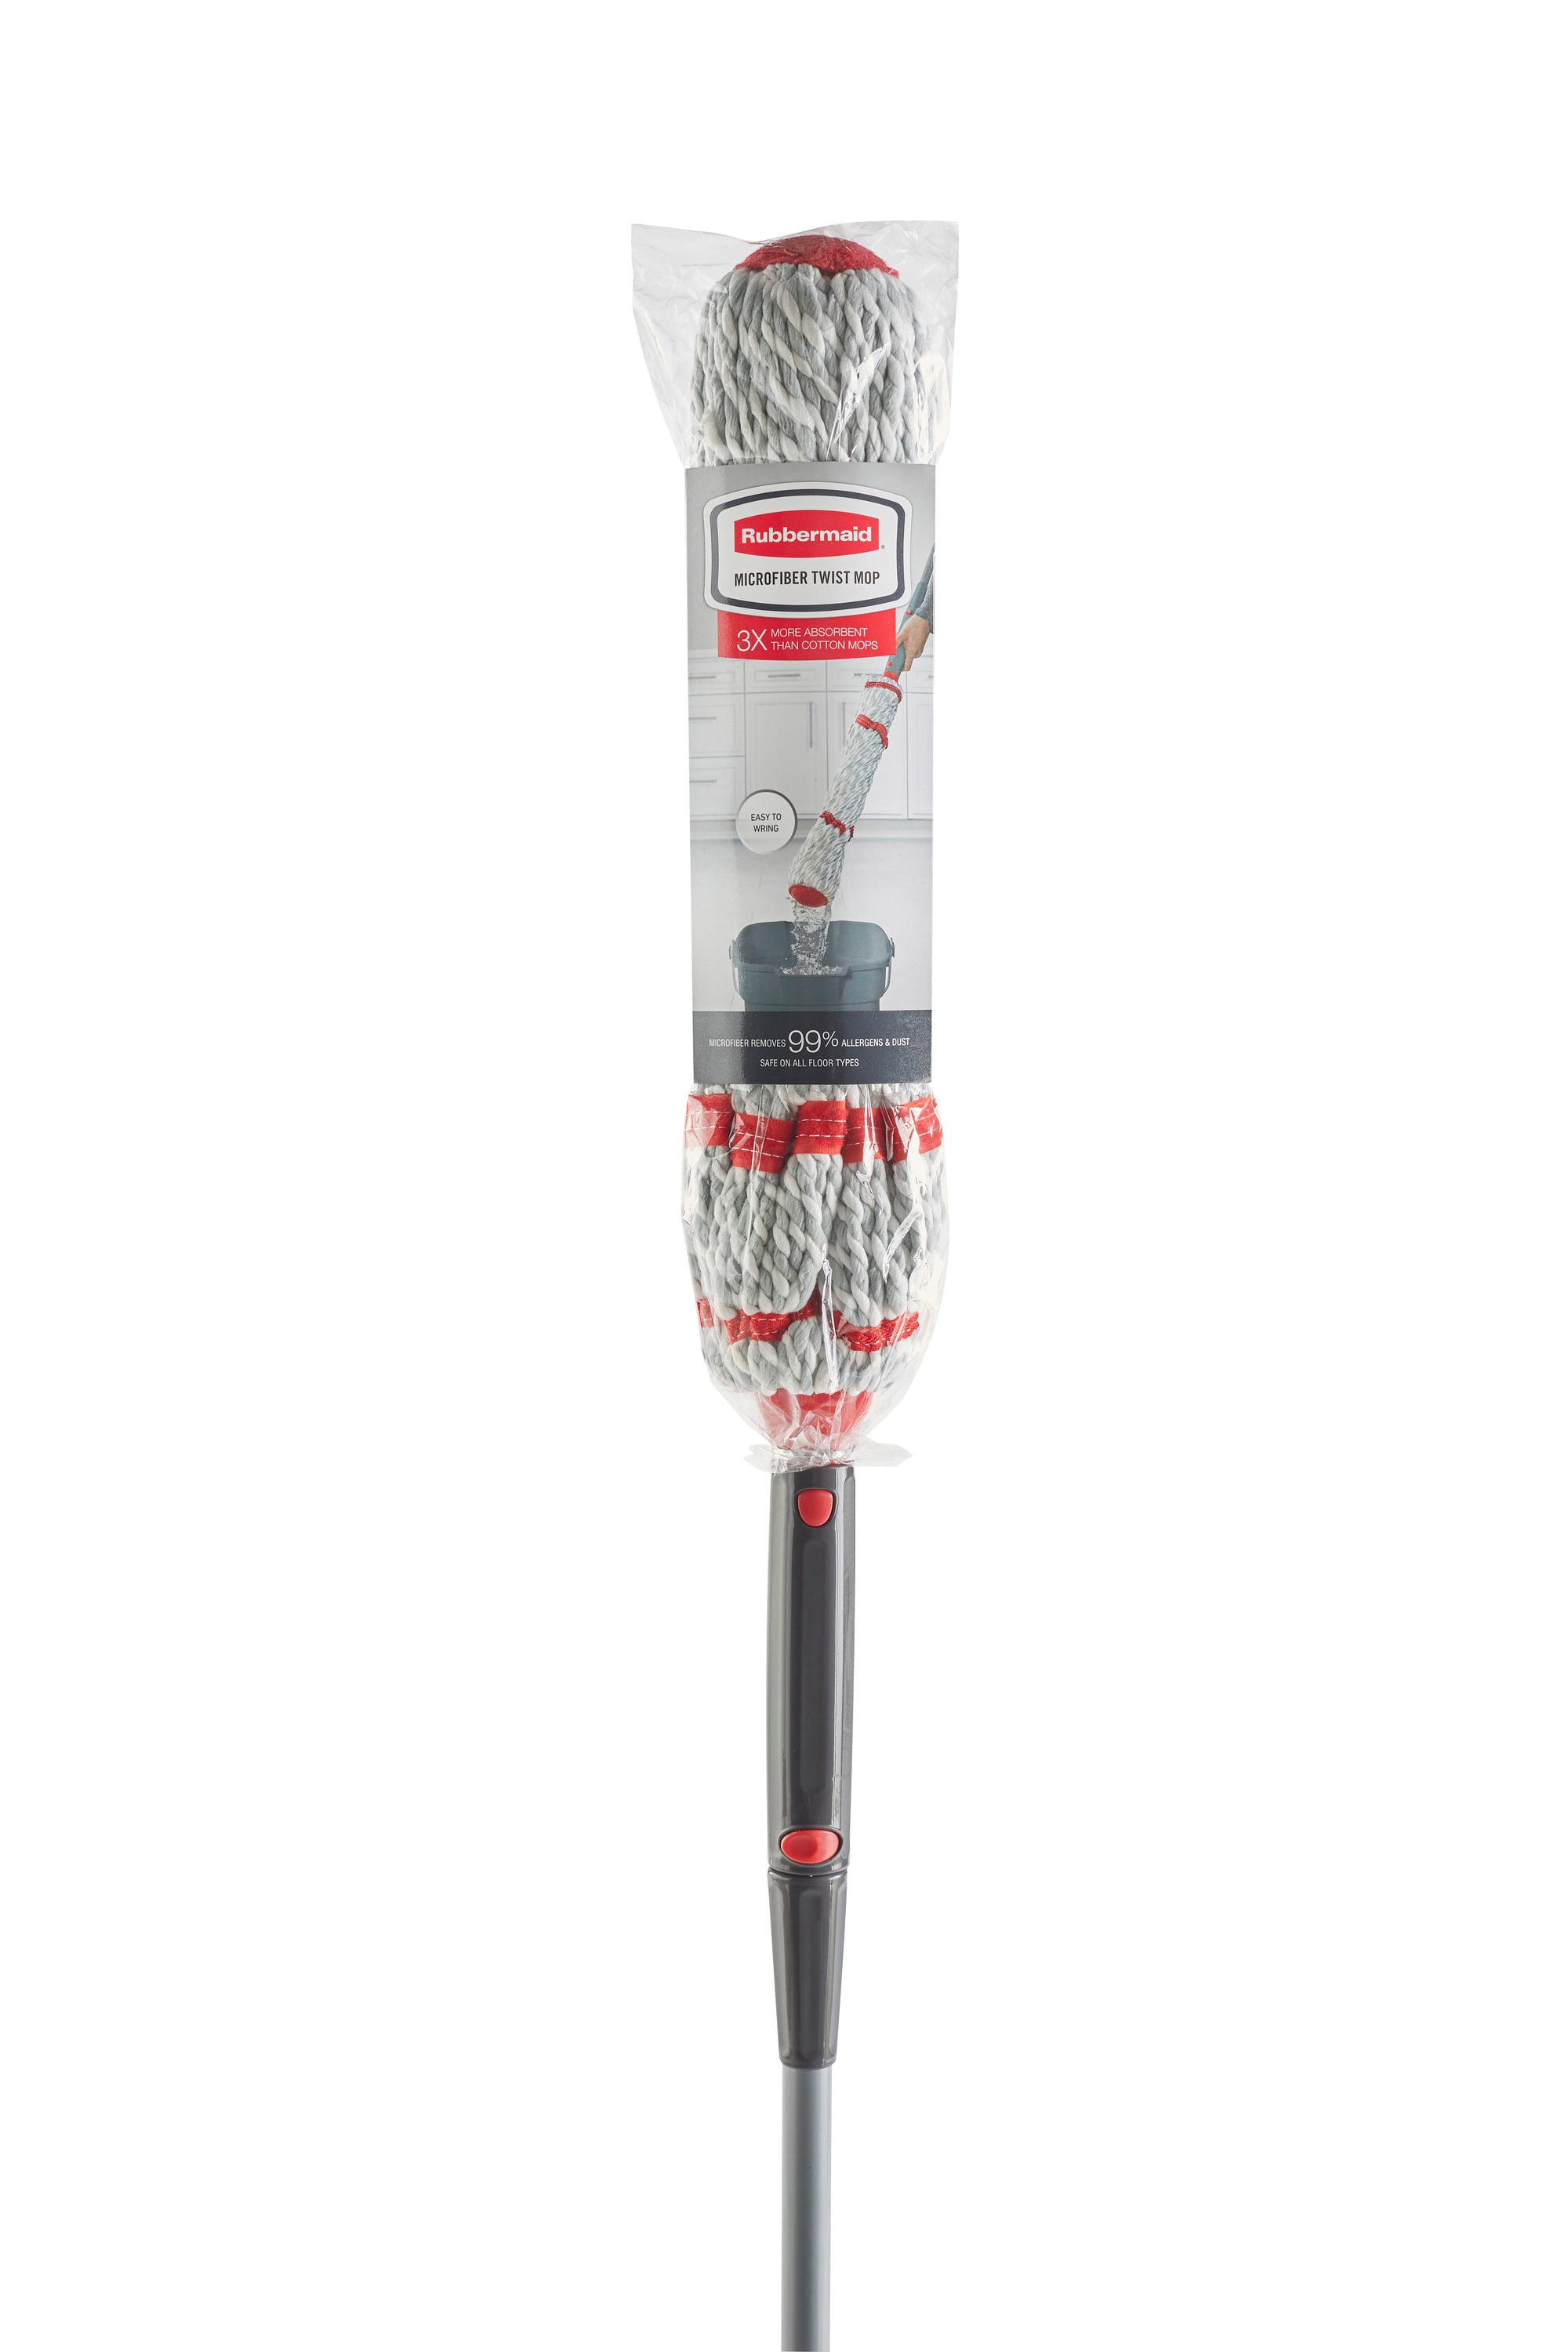 Rubbermaid Microfiber Twist Mop, 16 White Mop Head, 4.5 ft Plastic Handle,  Gray/Red (2088701)